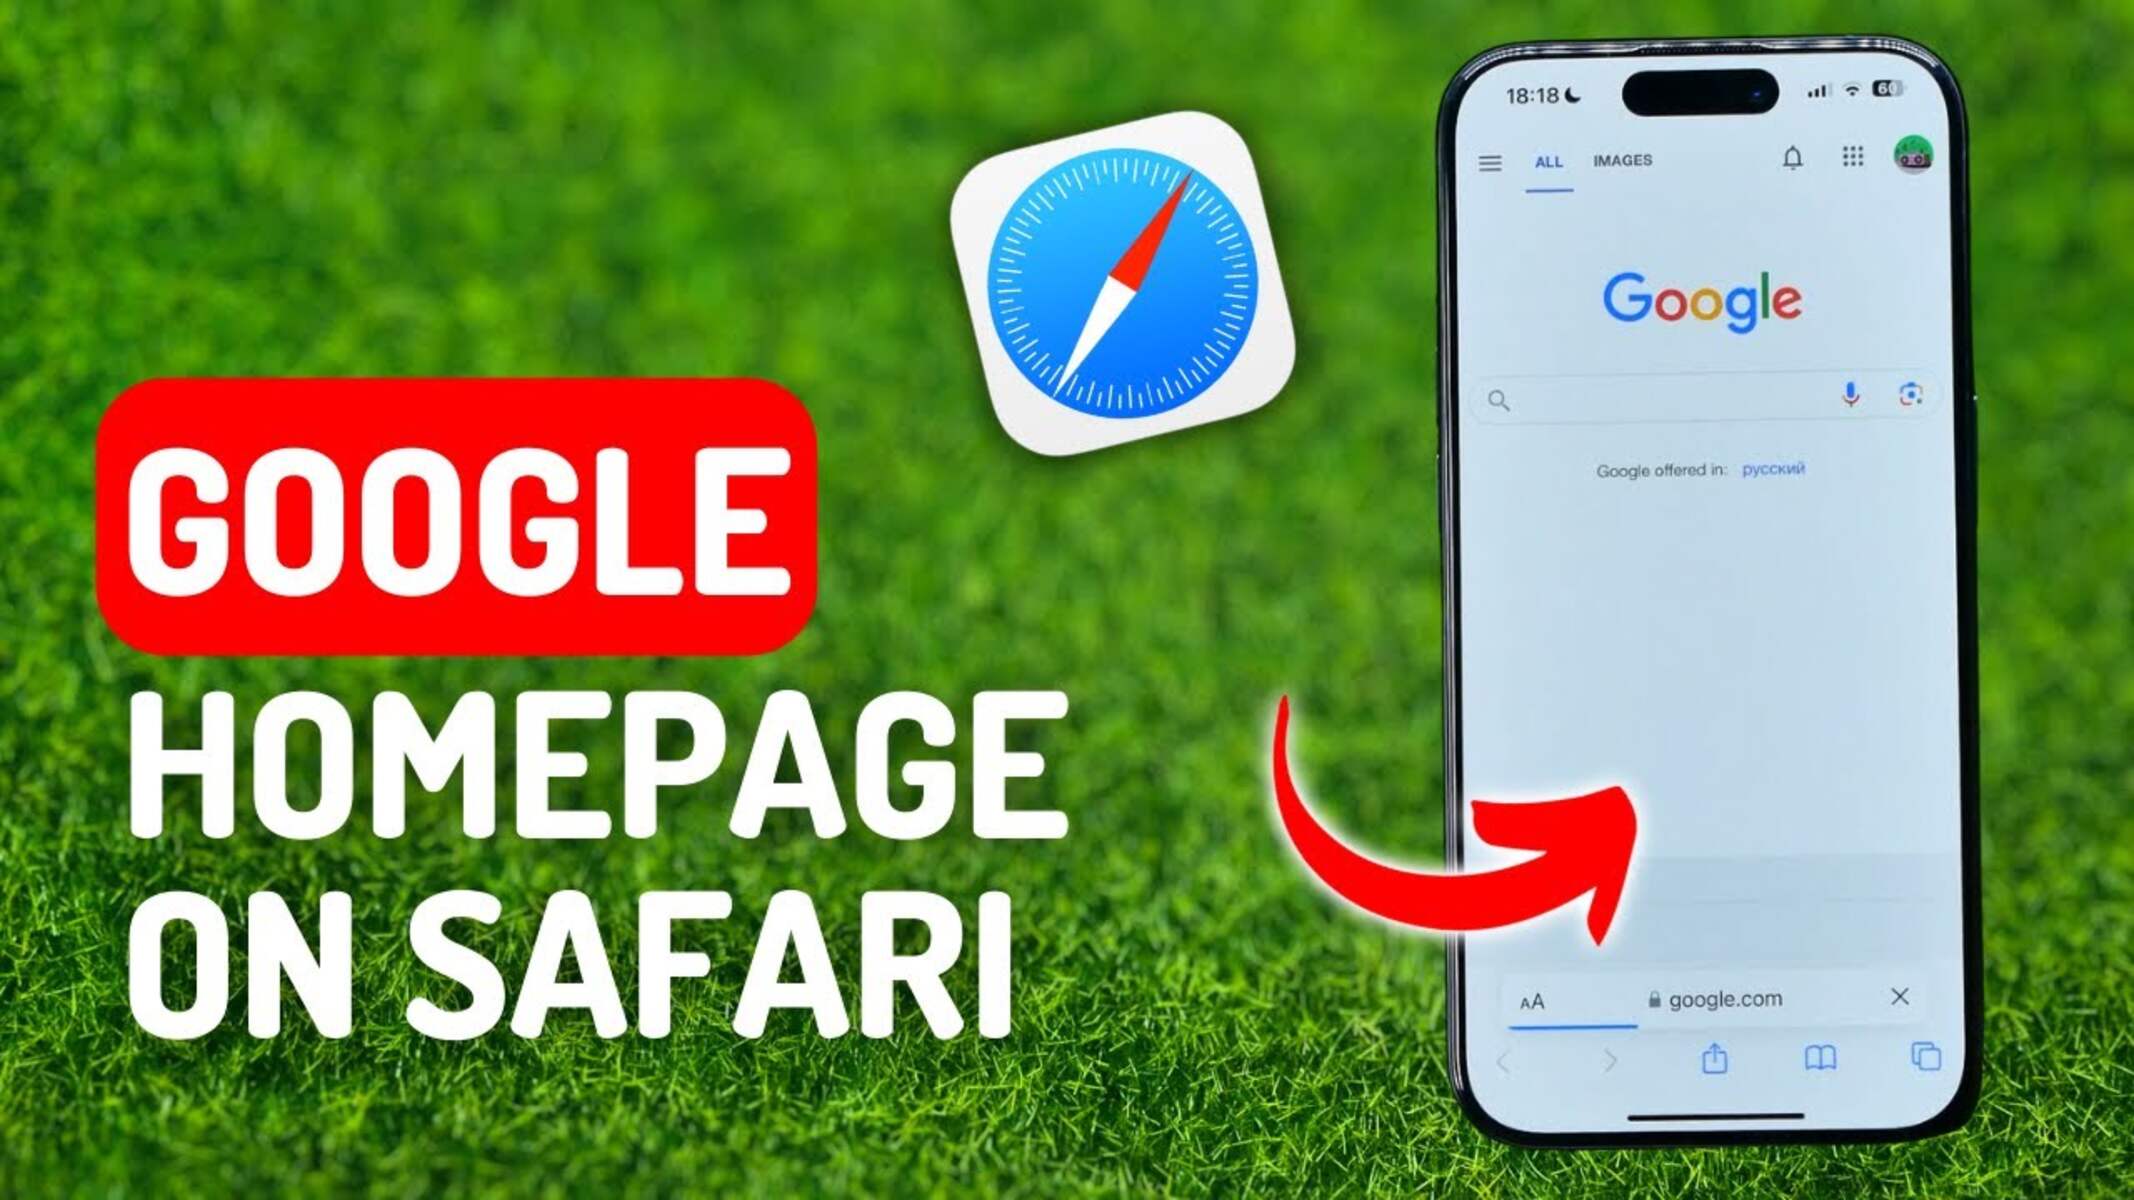 How To Make Google My Home Page On Safari